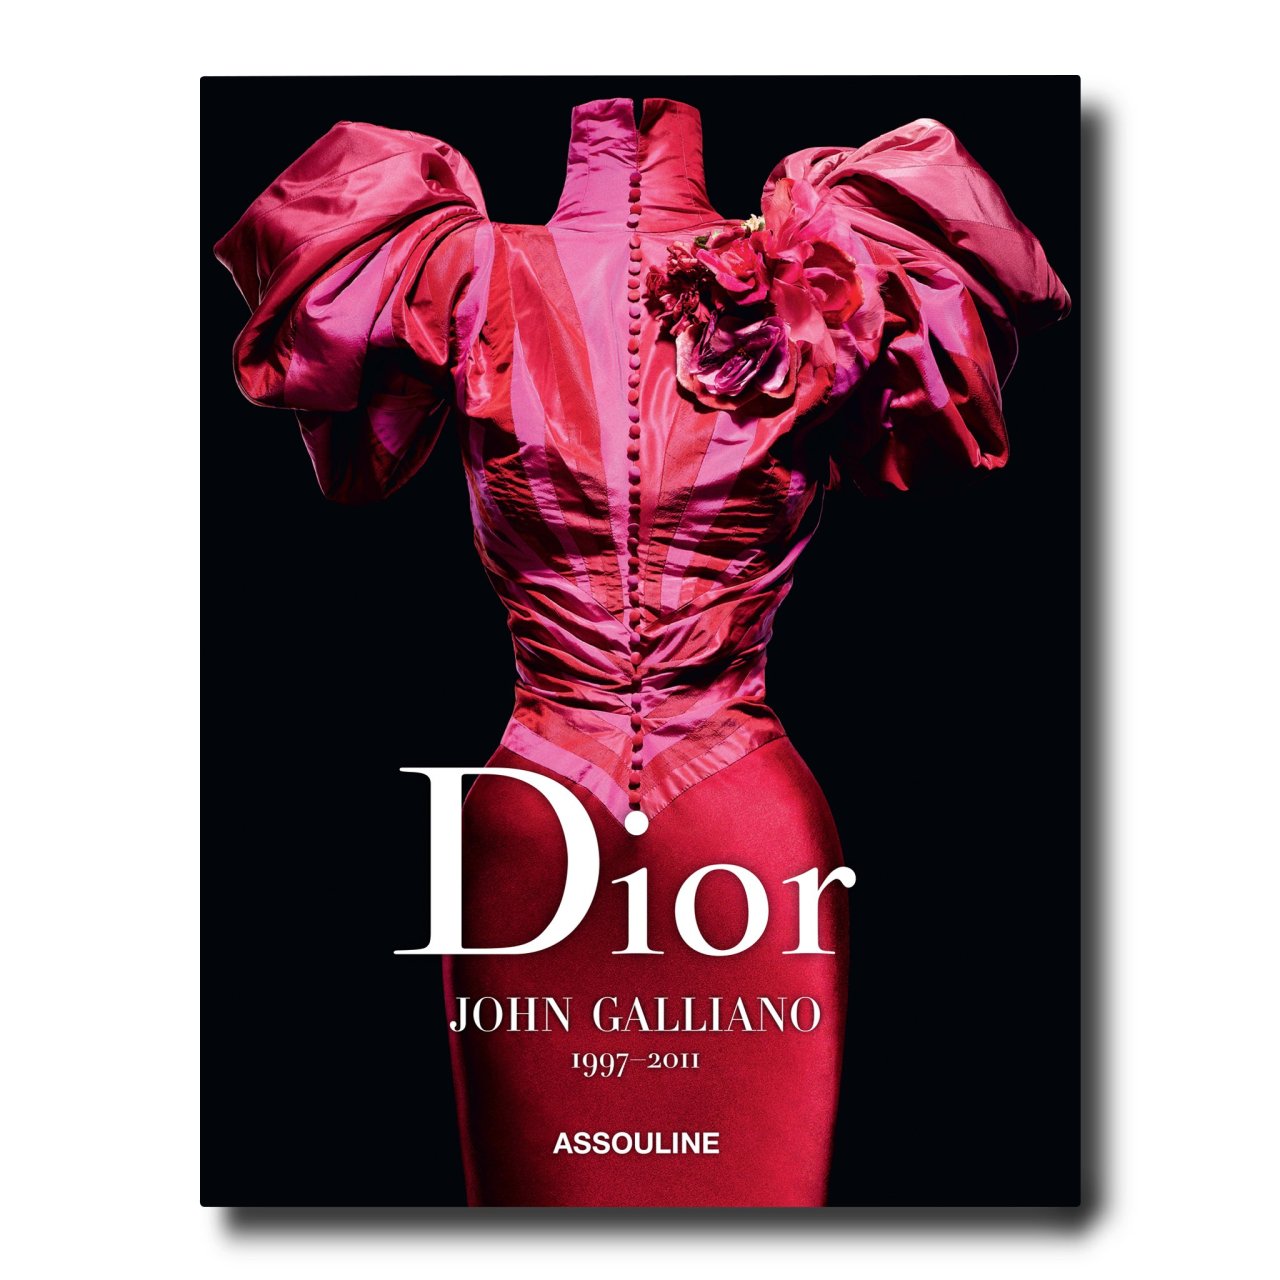 New Dior Book Focuses on the John Galliano Era. “Dior John Galliano ...